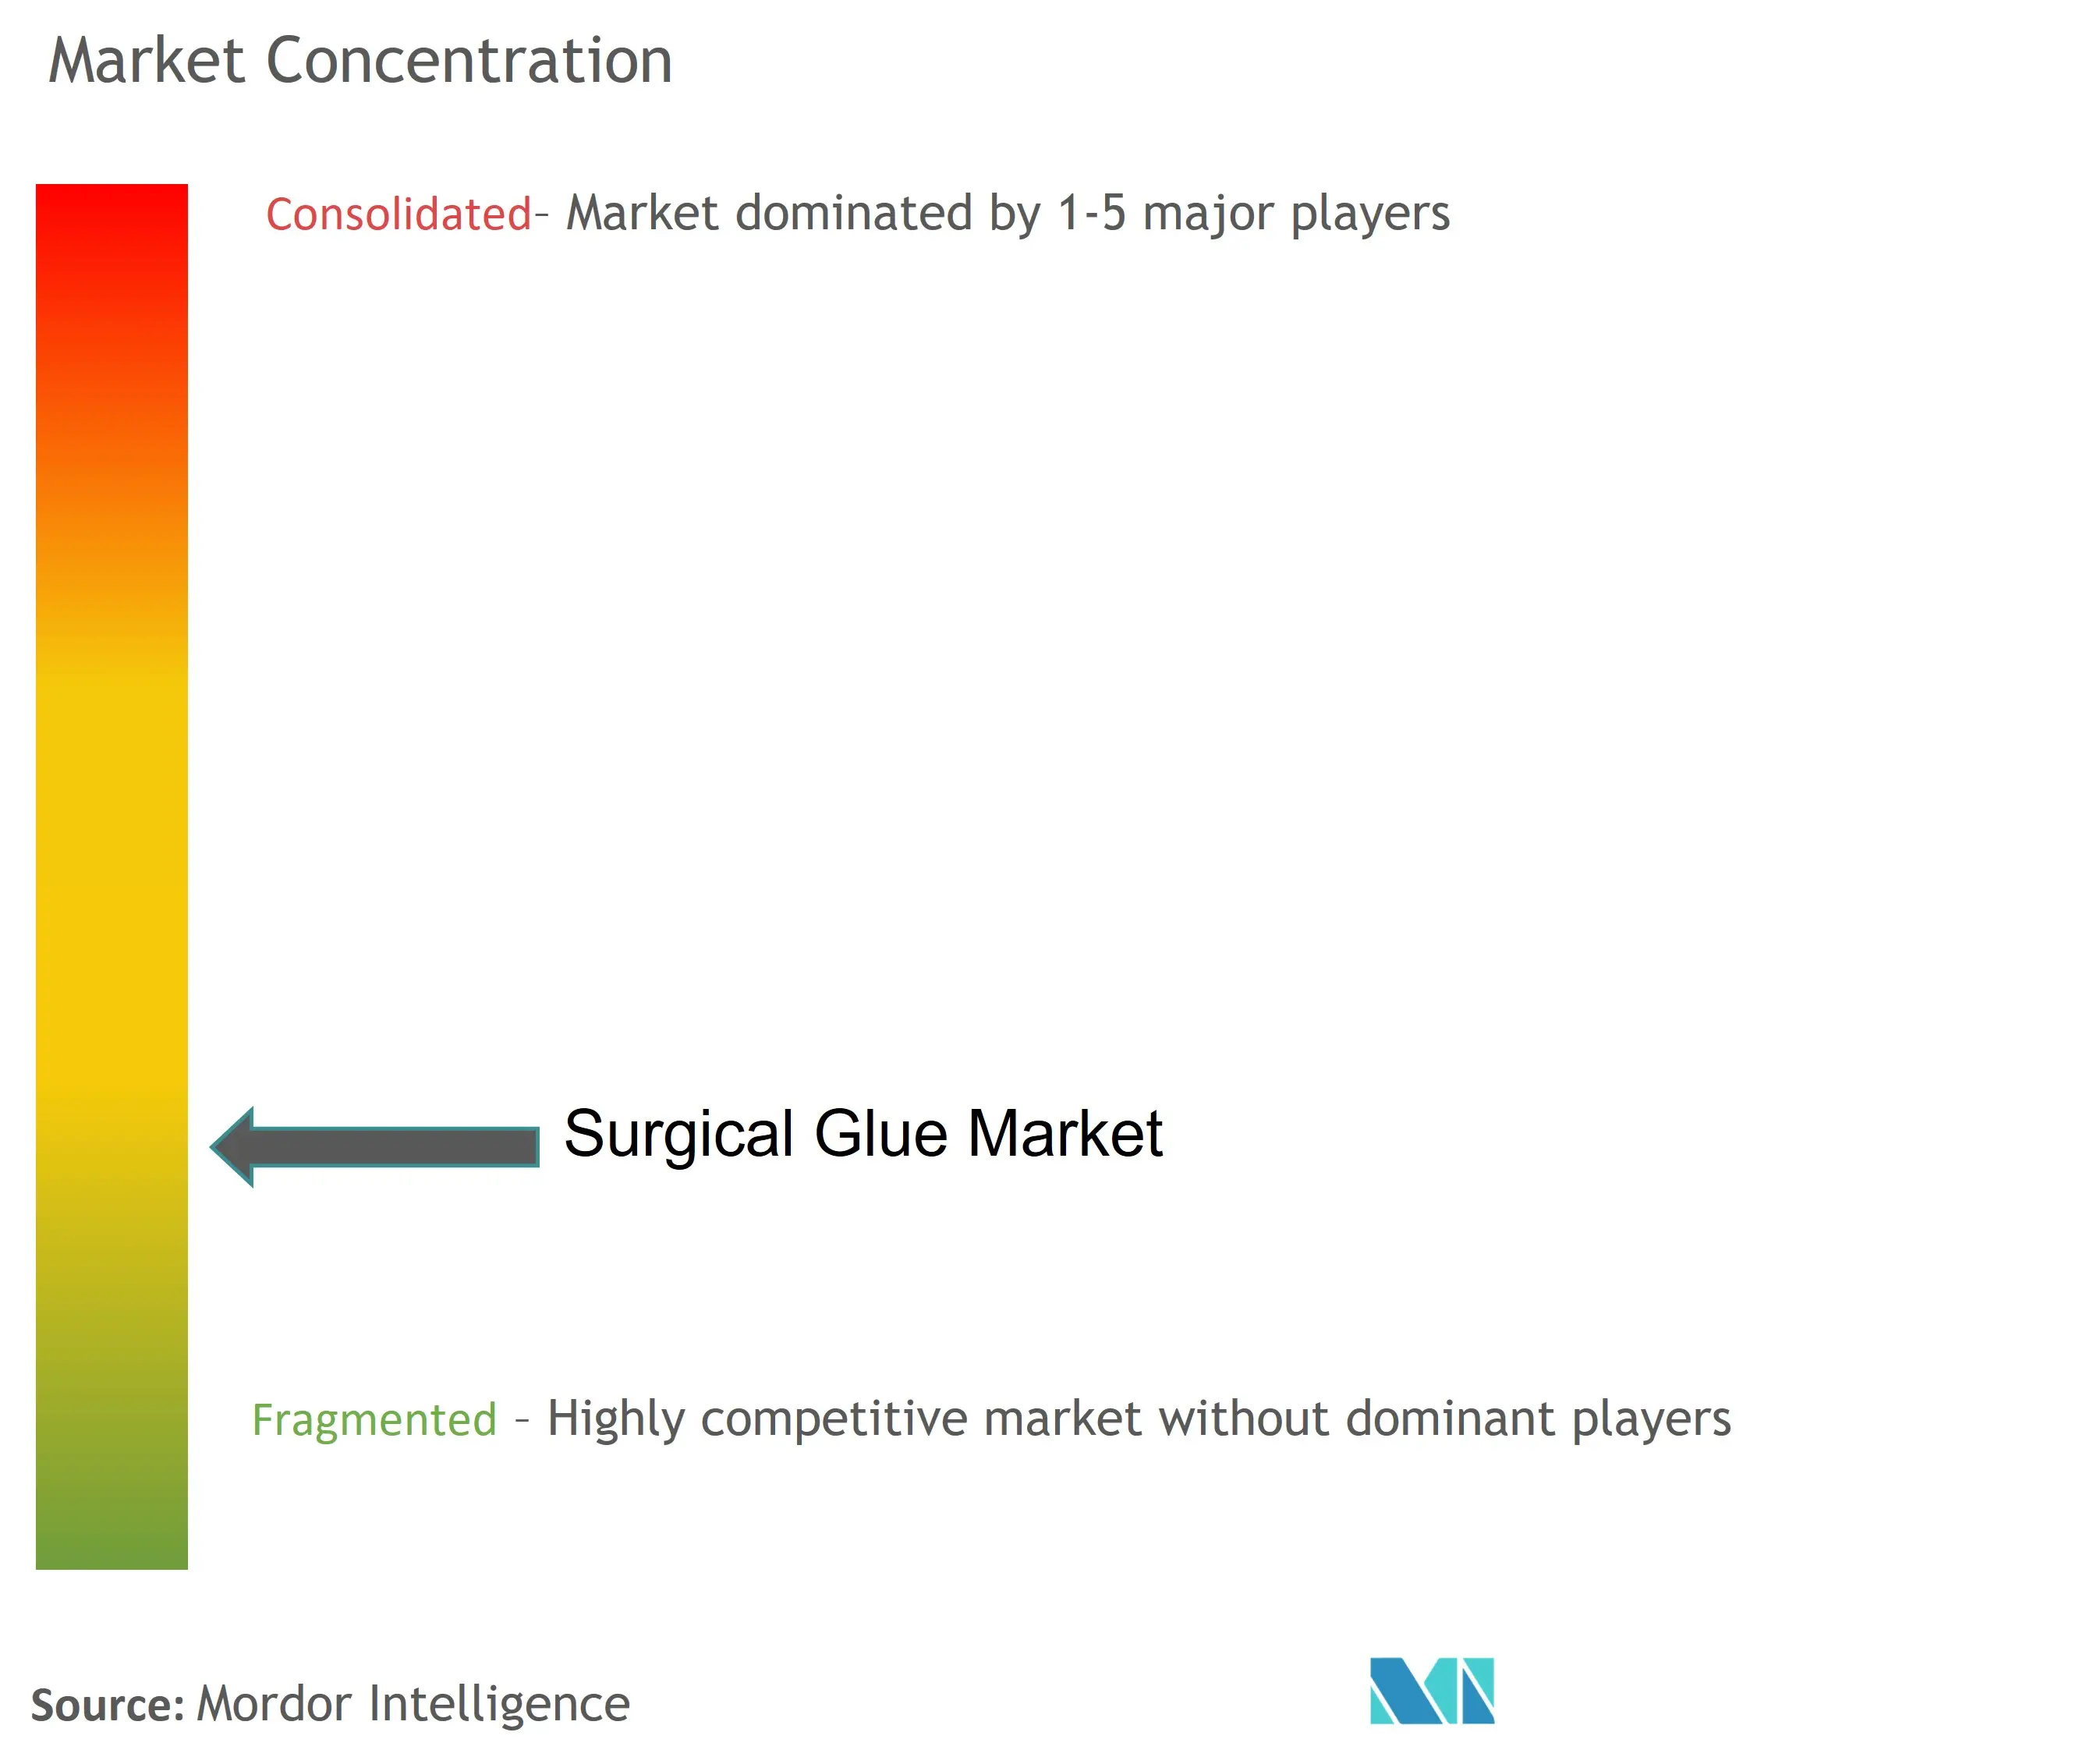 Surgical Glue Market Concentration